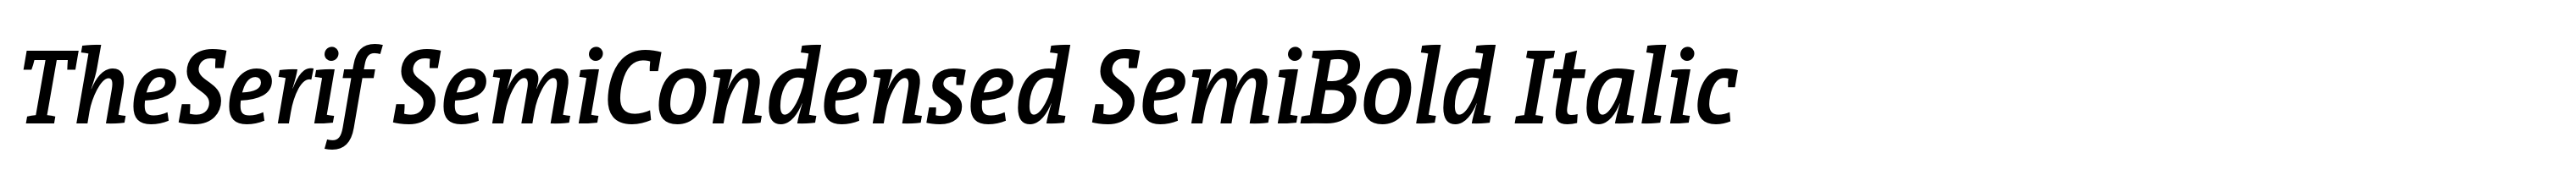 TheSerif SemiCondensed SemiBold Italic